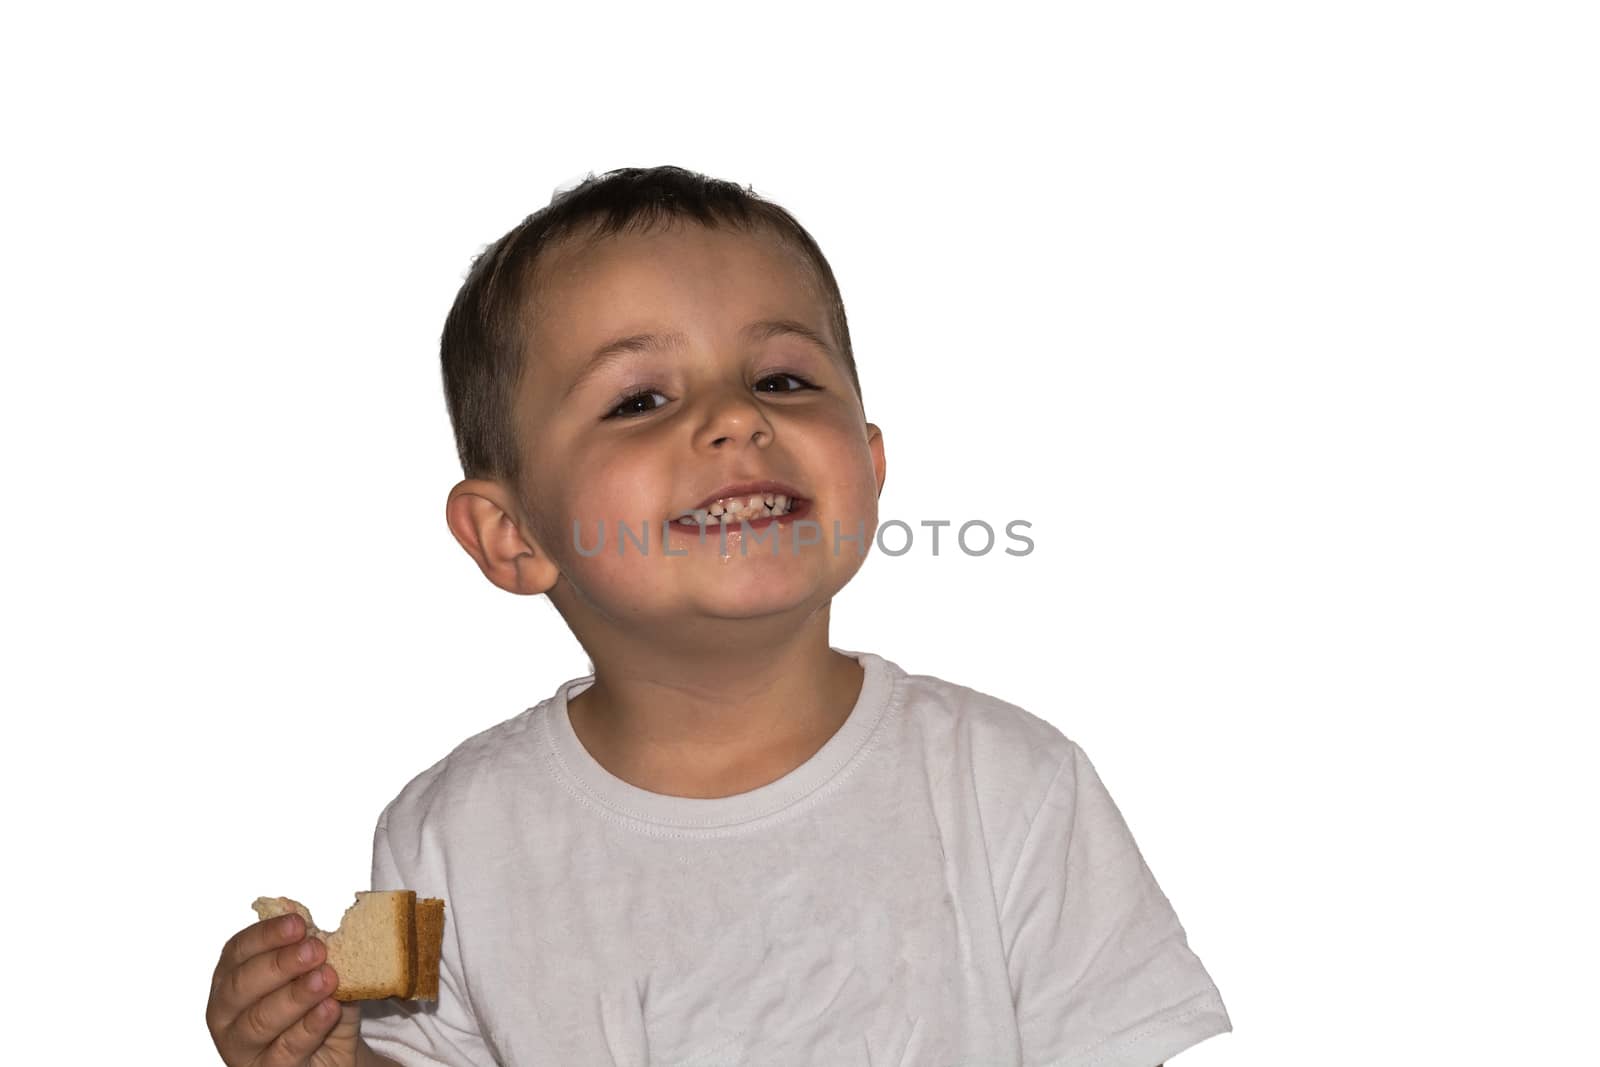  Little boy with sandwich in hand by JFsPic